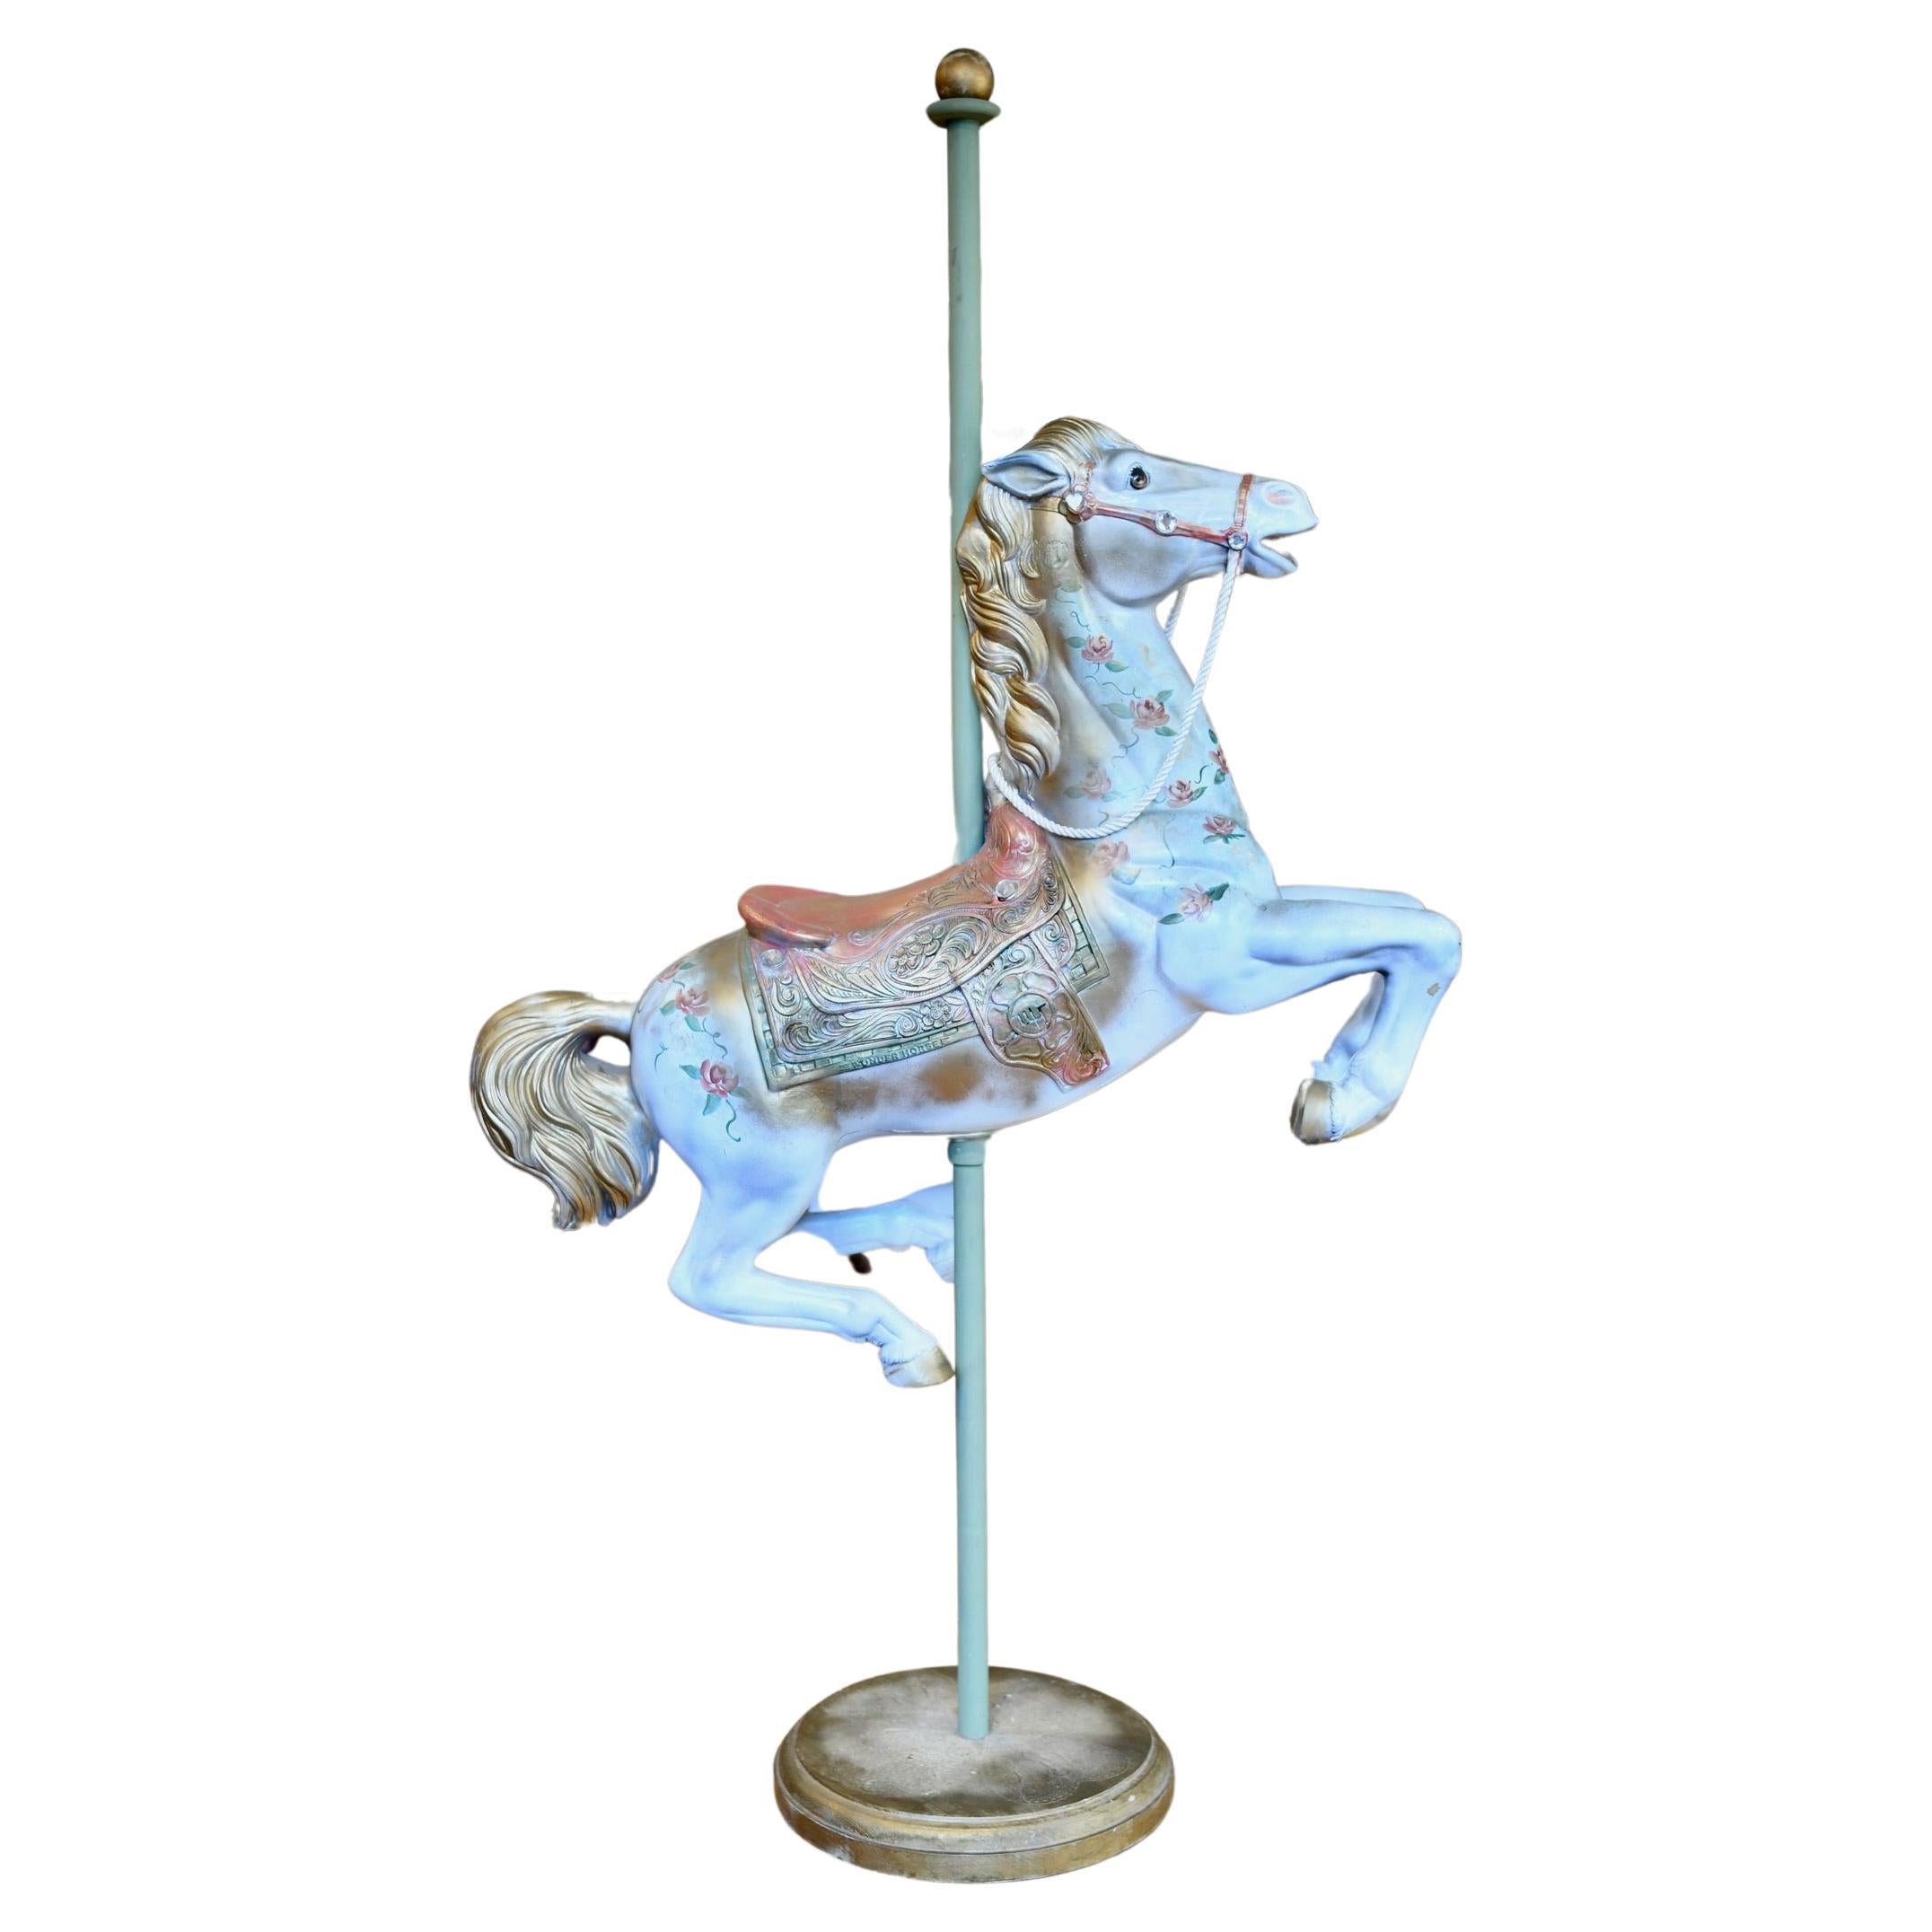 Decorative Carousel Horse For Sale